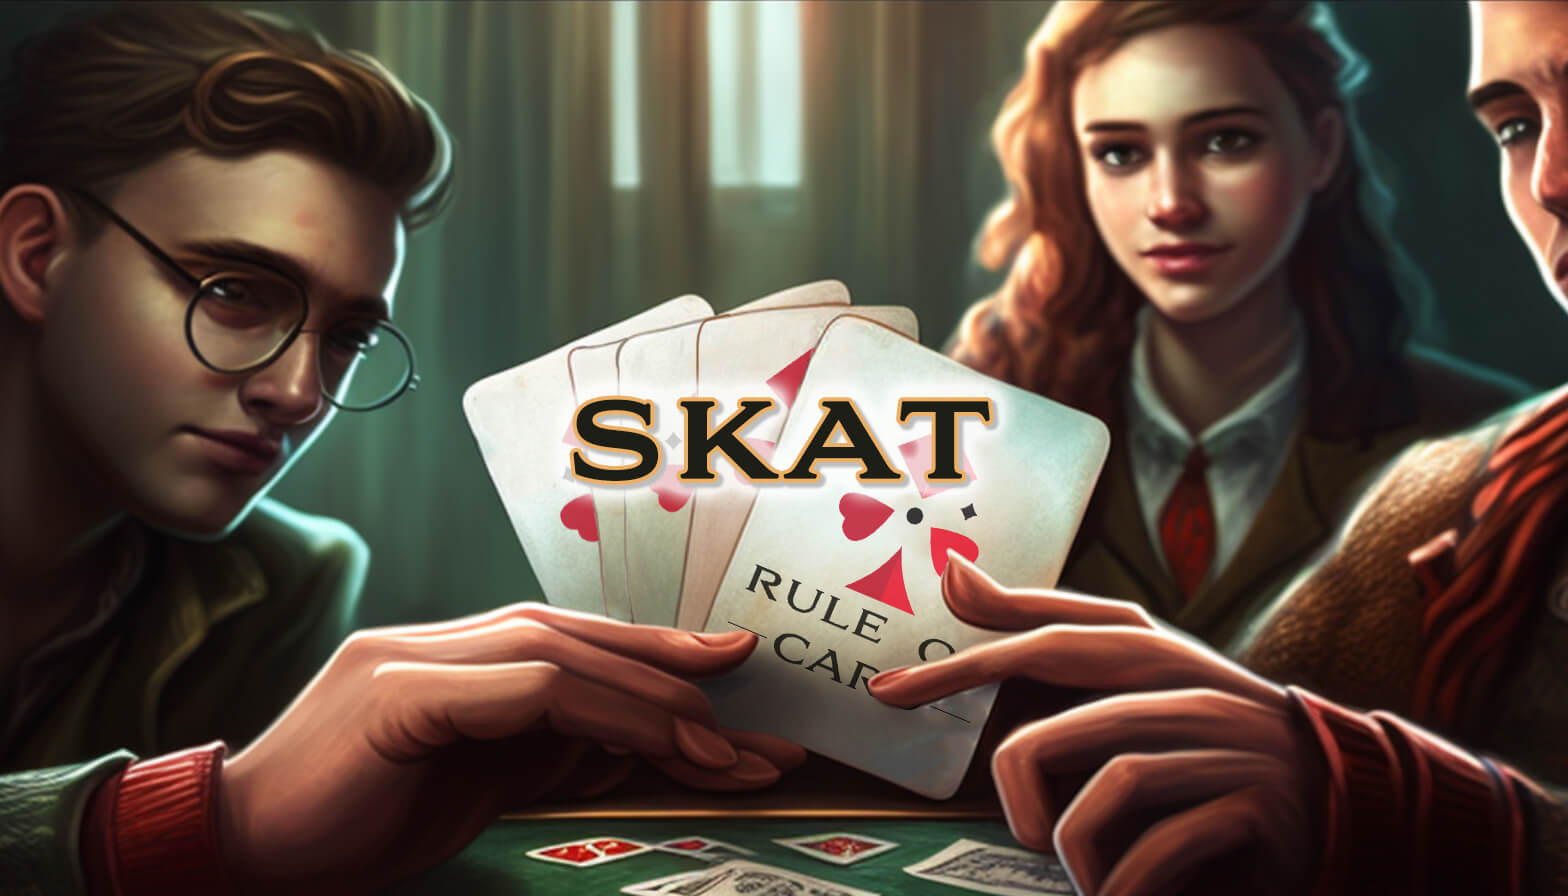 Playing the card game Skat